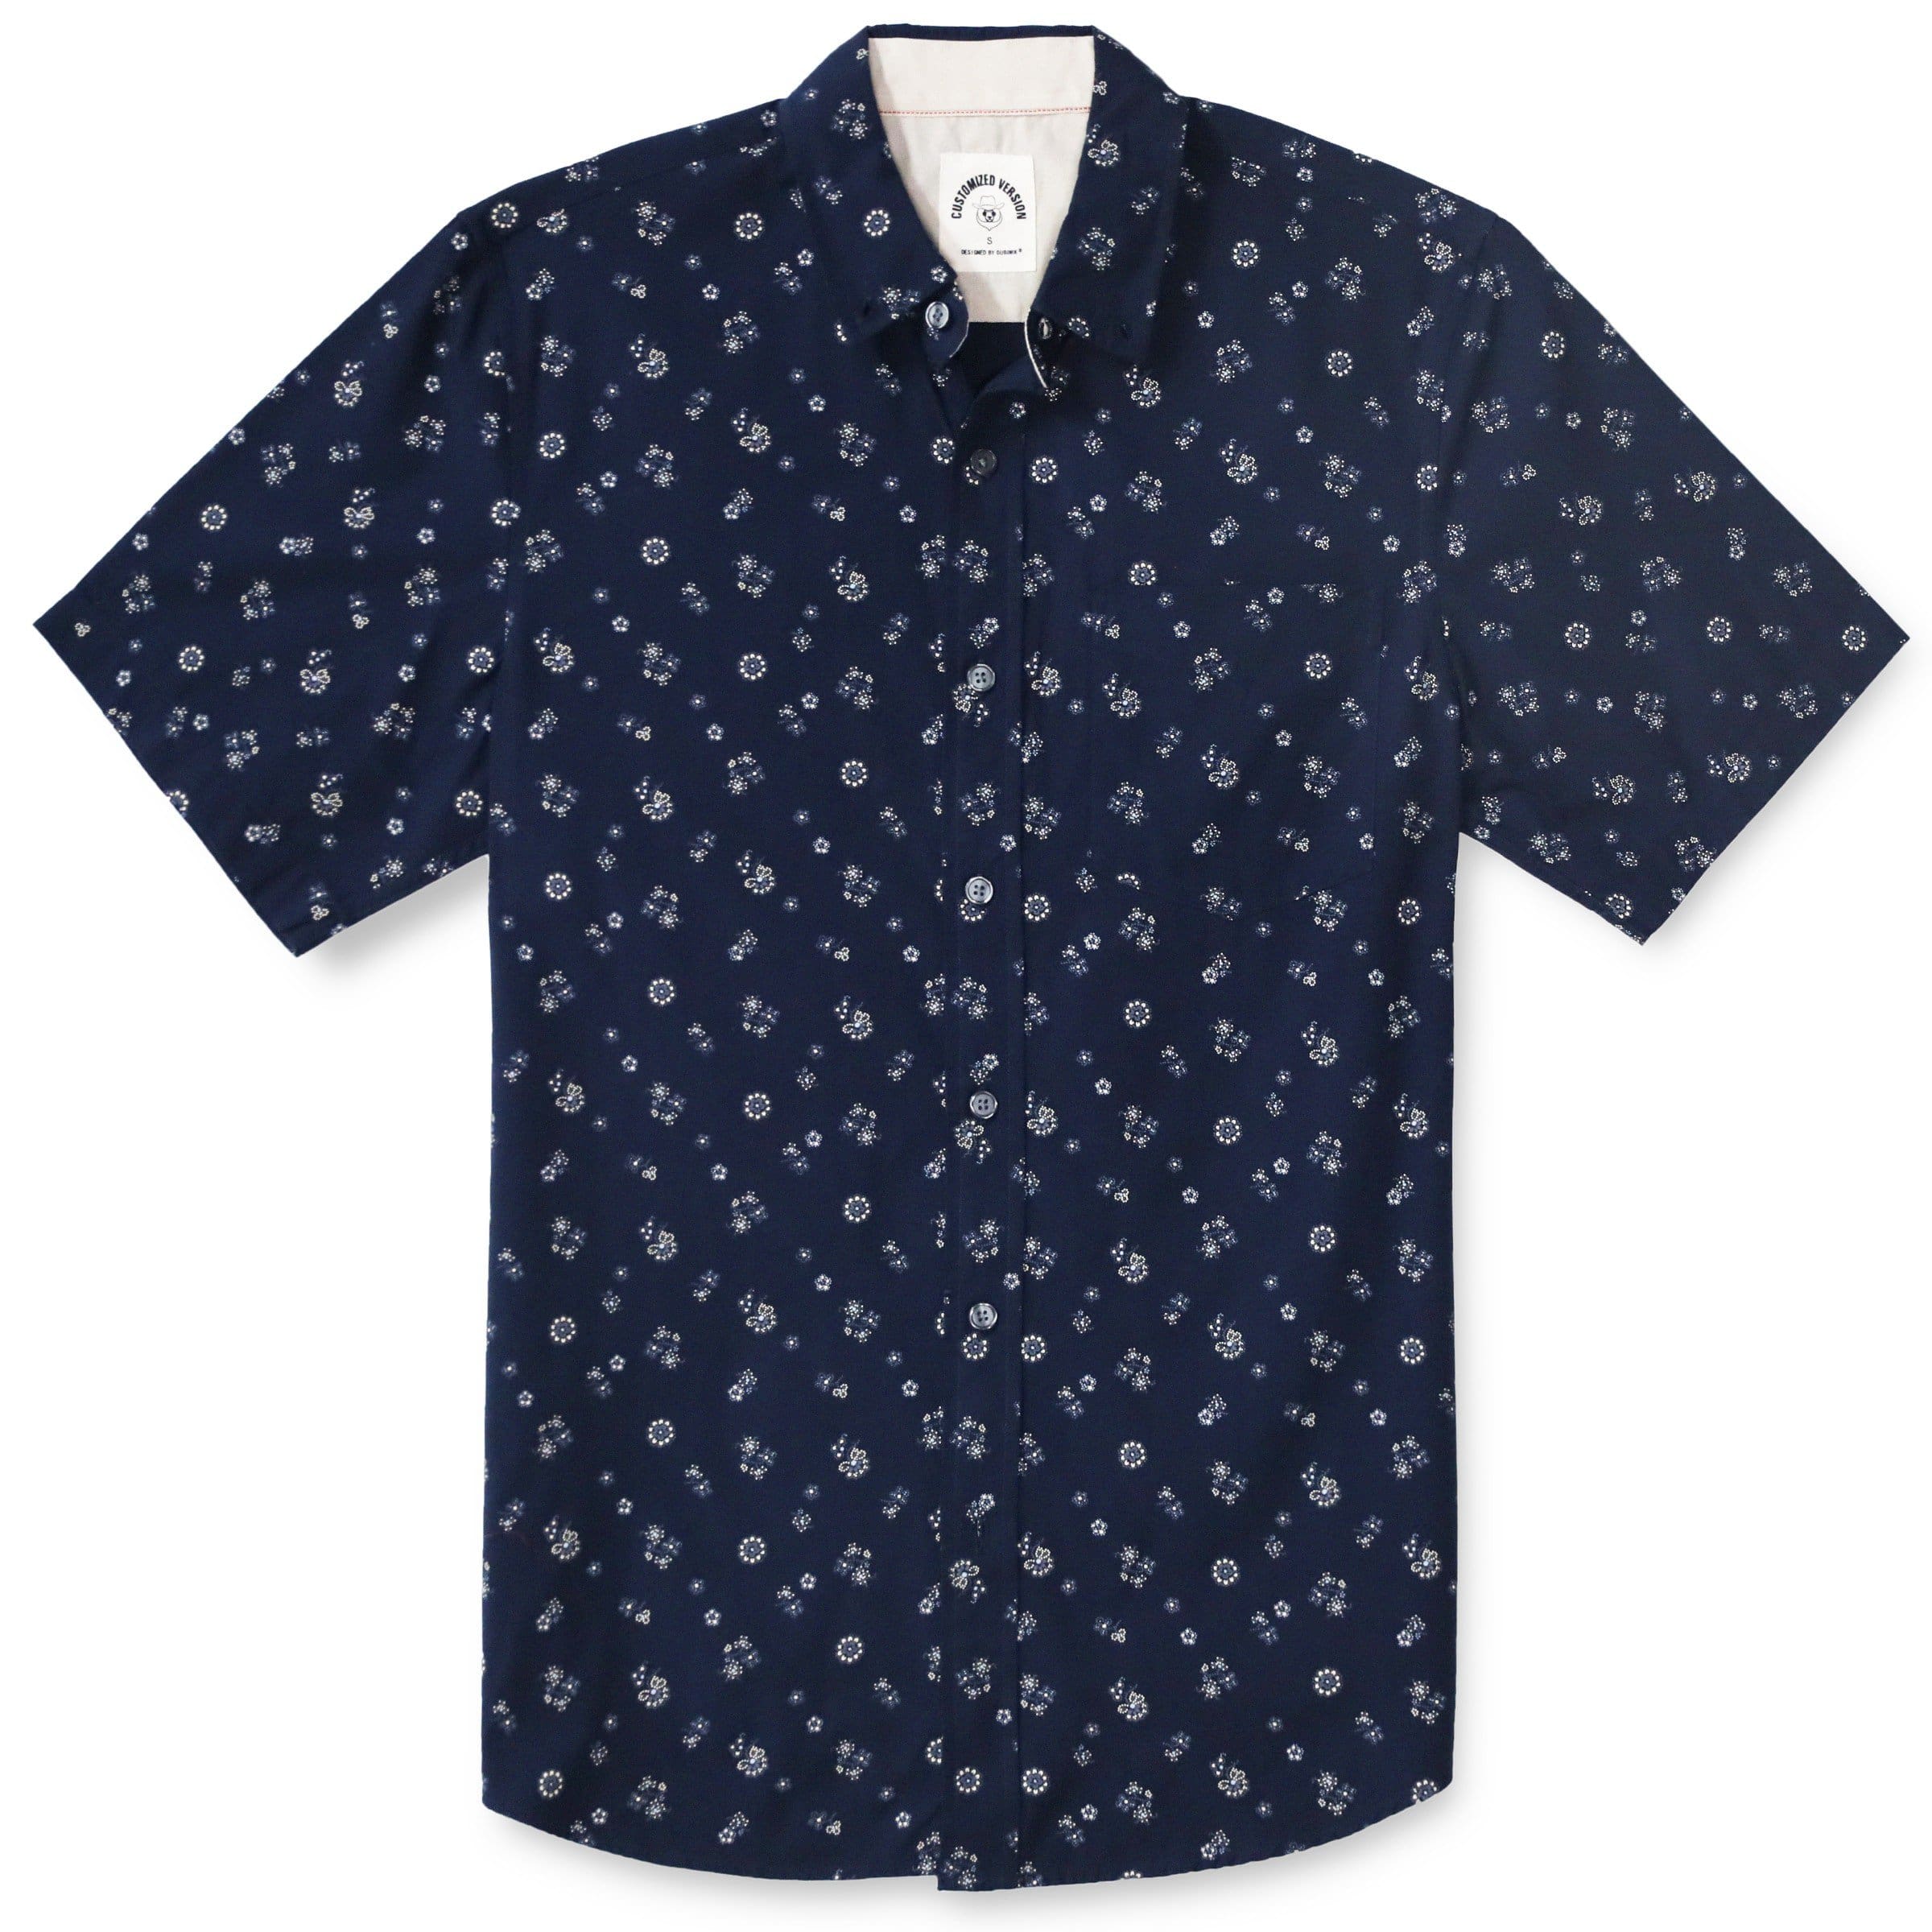 Men's casual short-sleeved cotton shirt #0103